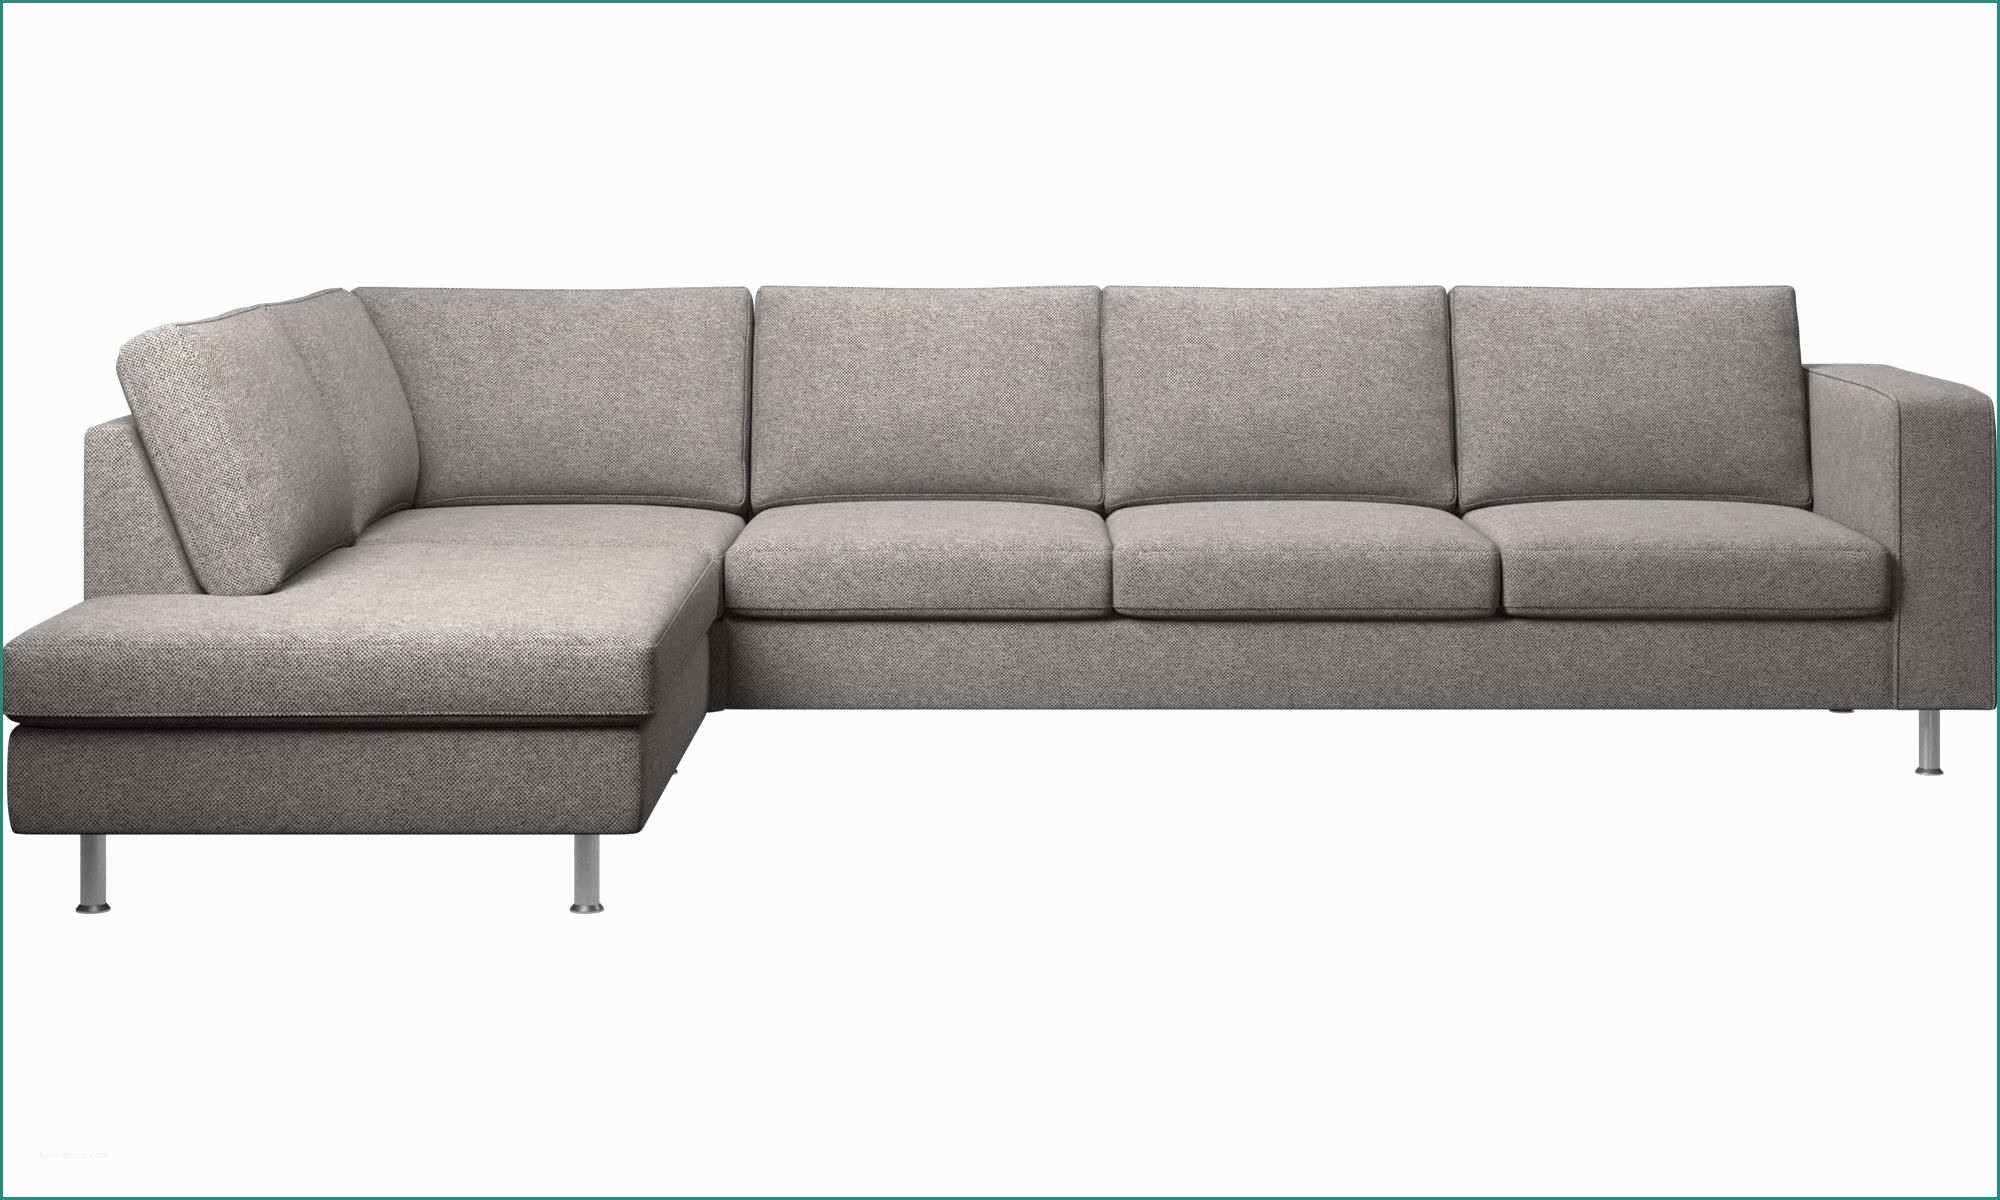 Chaise Longue Divano E sofas with Chaise Longue Indivi 2 Corner sofa with Chaise Longue